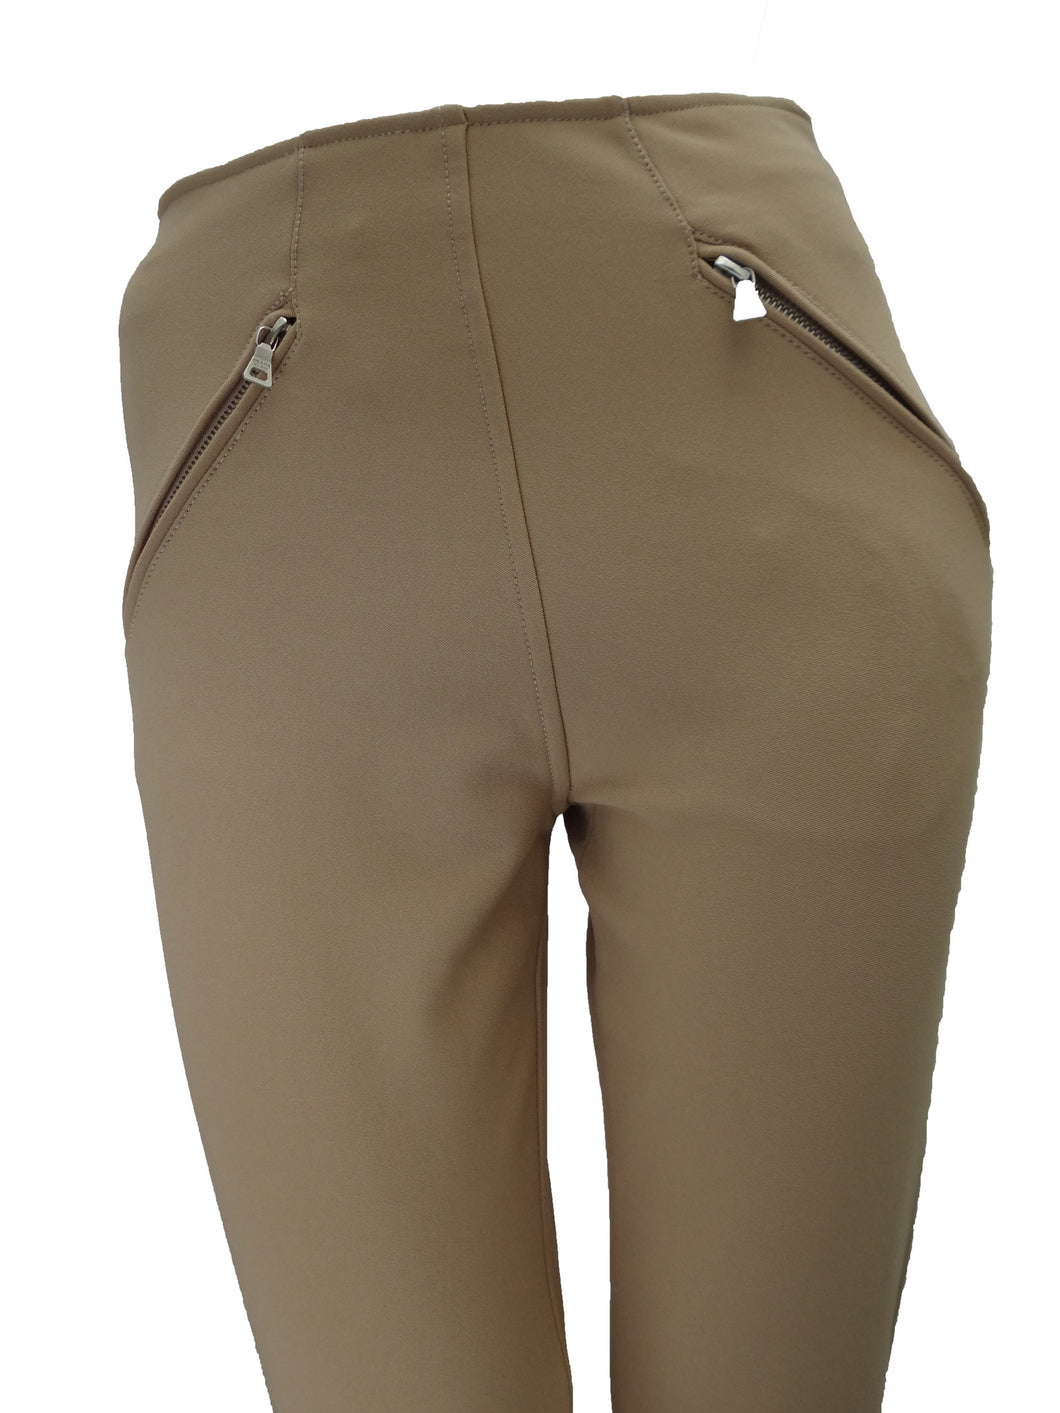 Prada Camel Jodhpur Trousers with Stirrup UK8-10